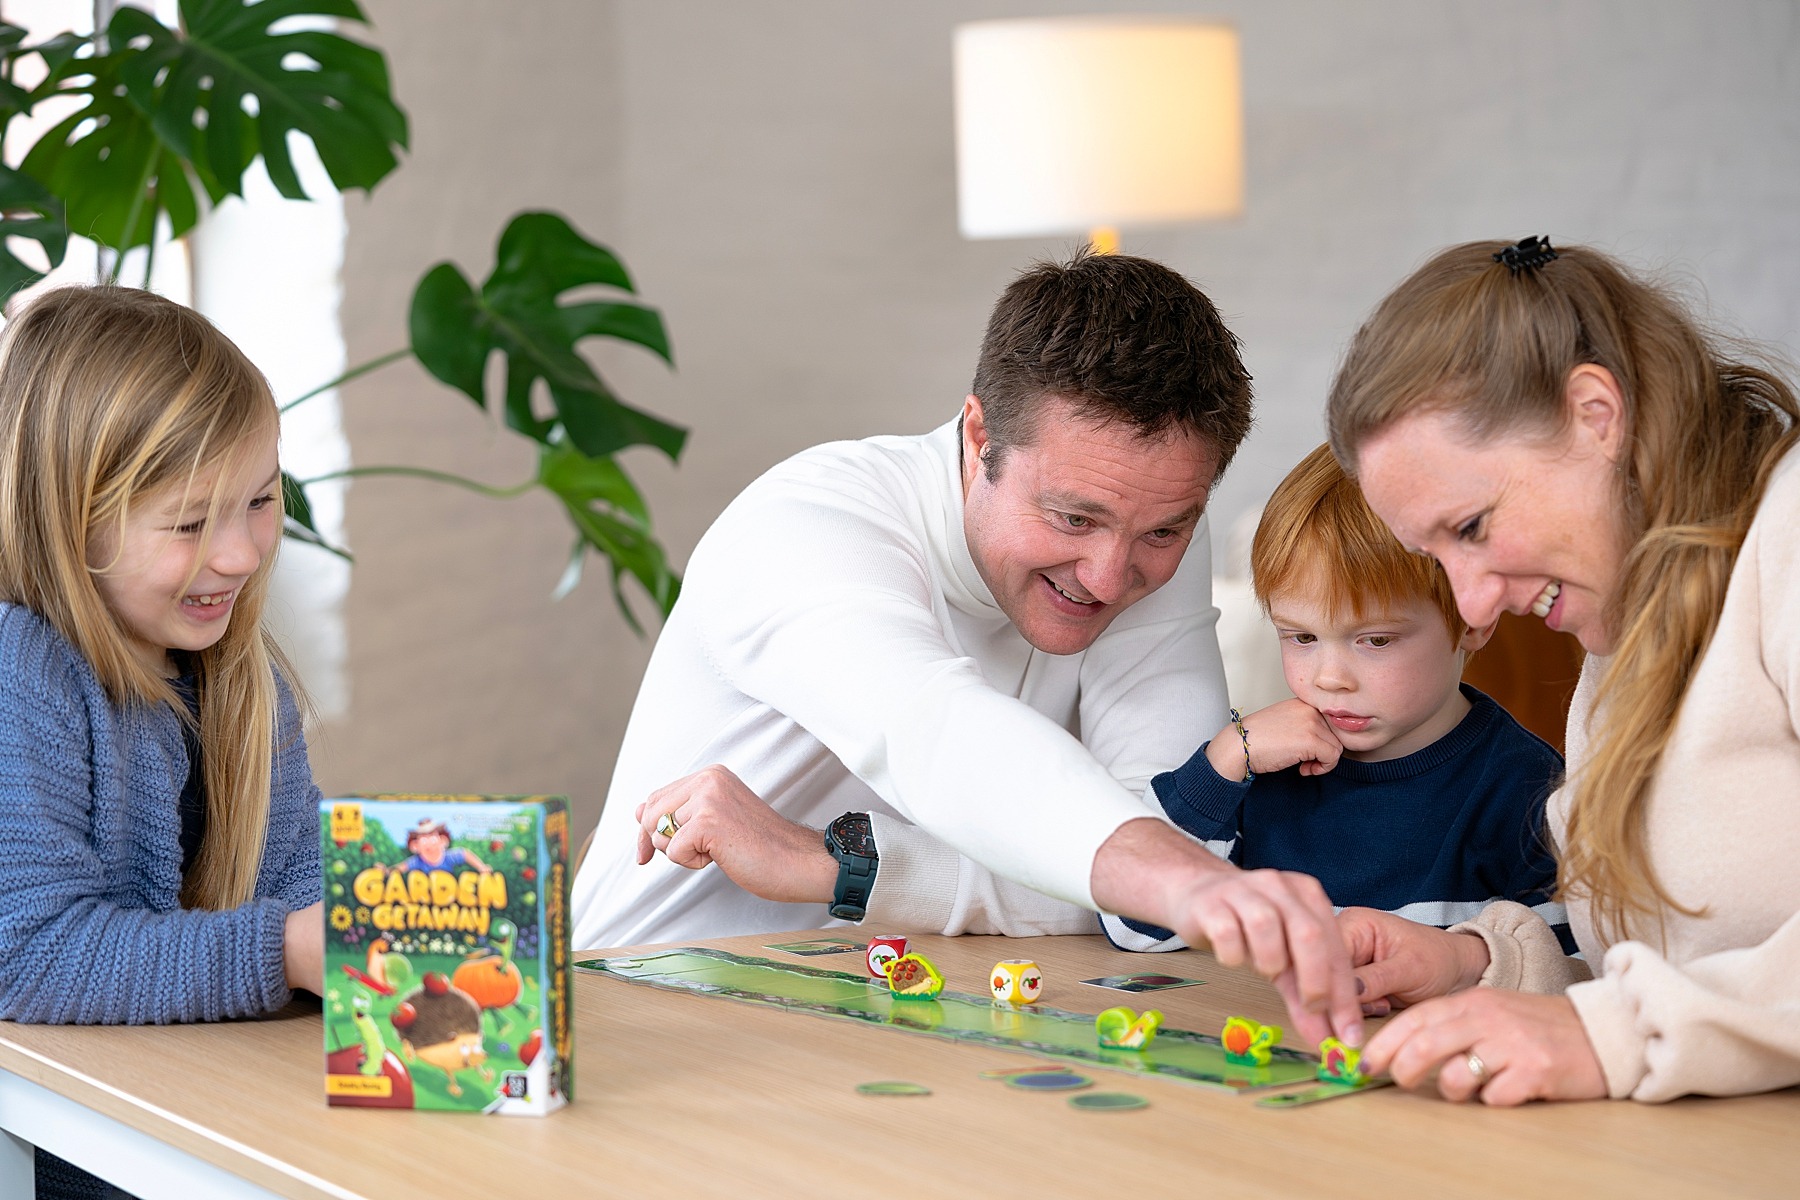 Carapate Garden getaway Gigamic jeu de société famille enfant boardgame 